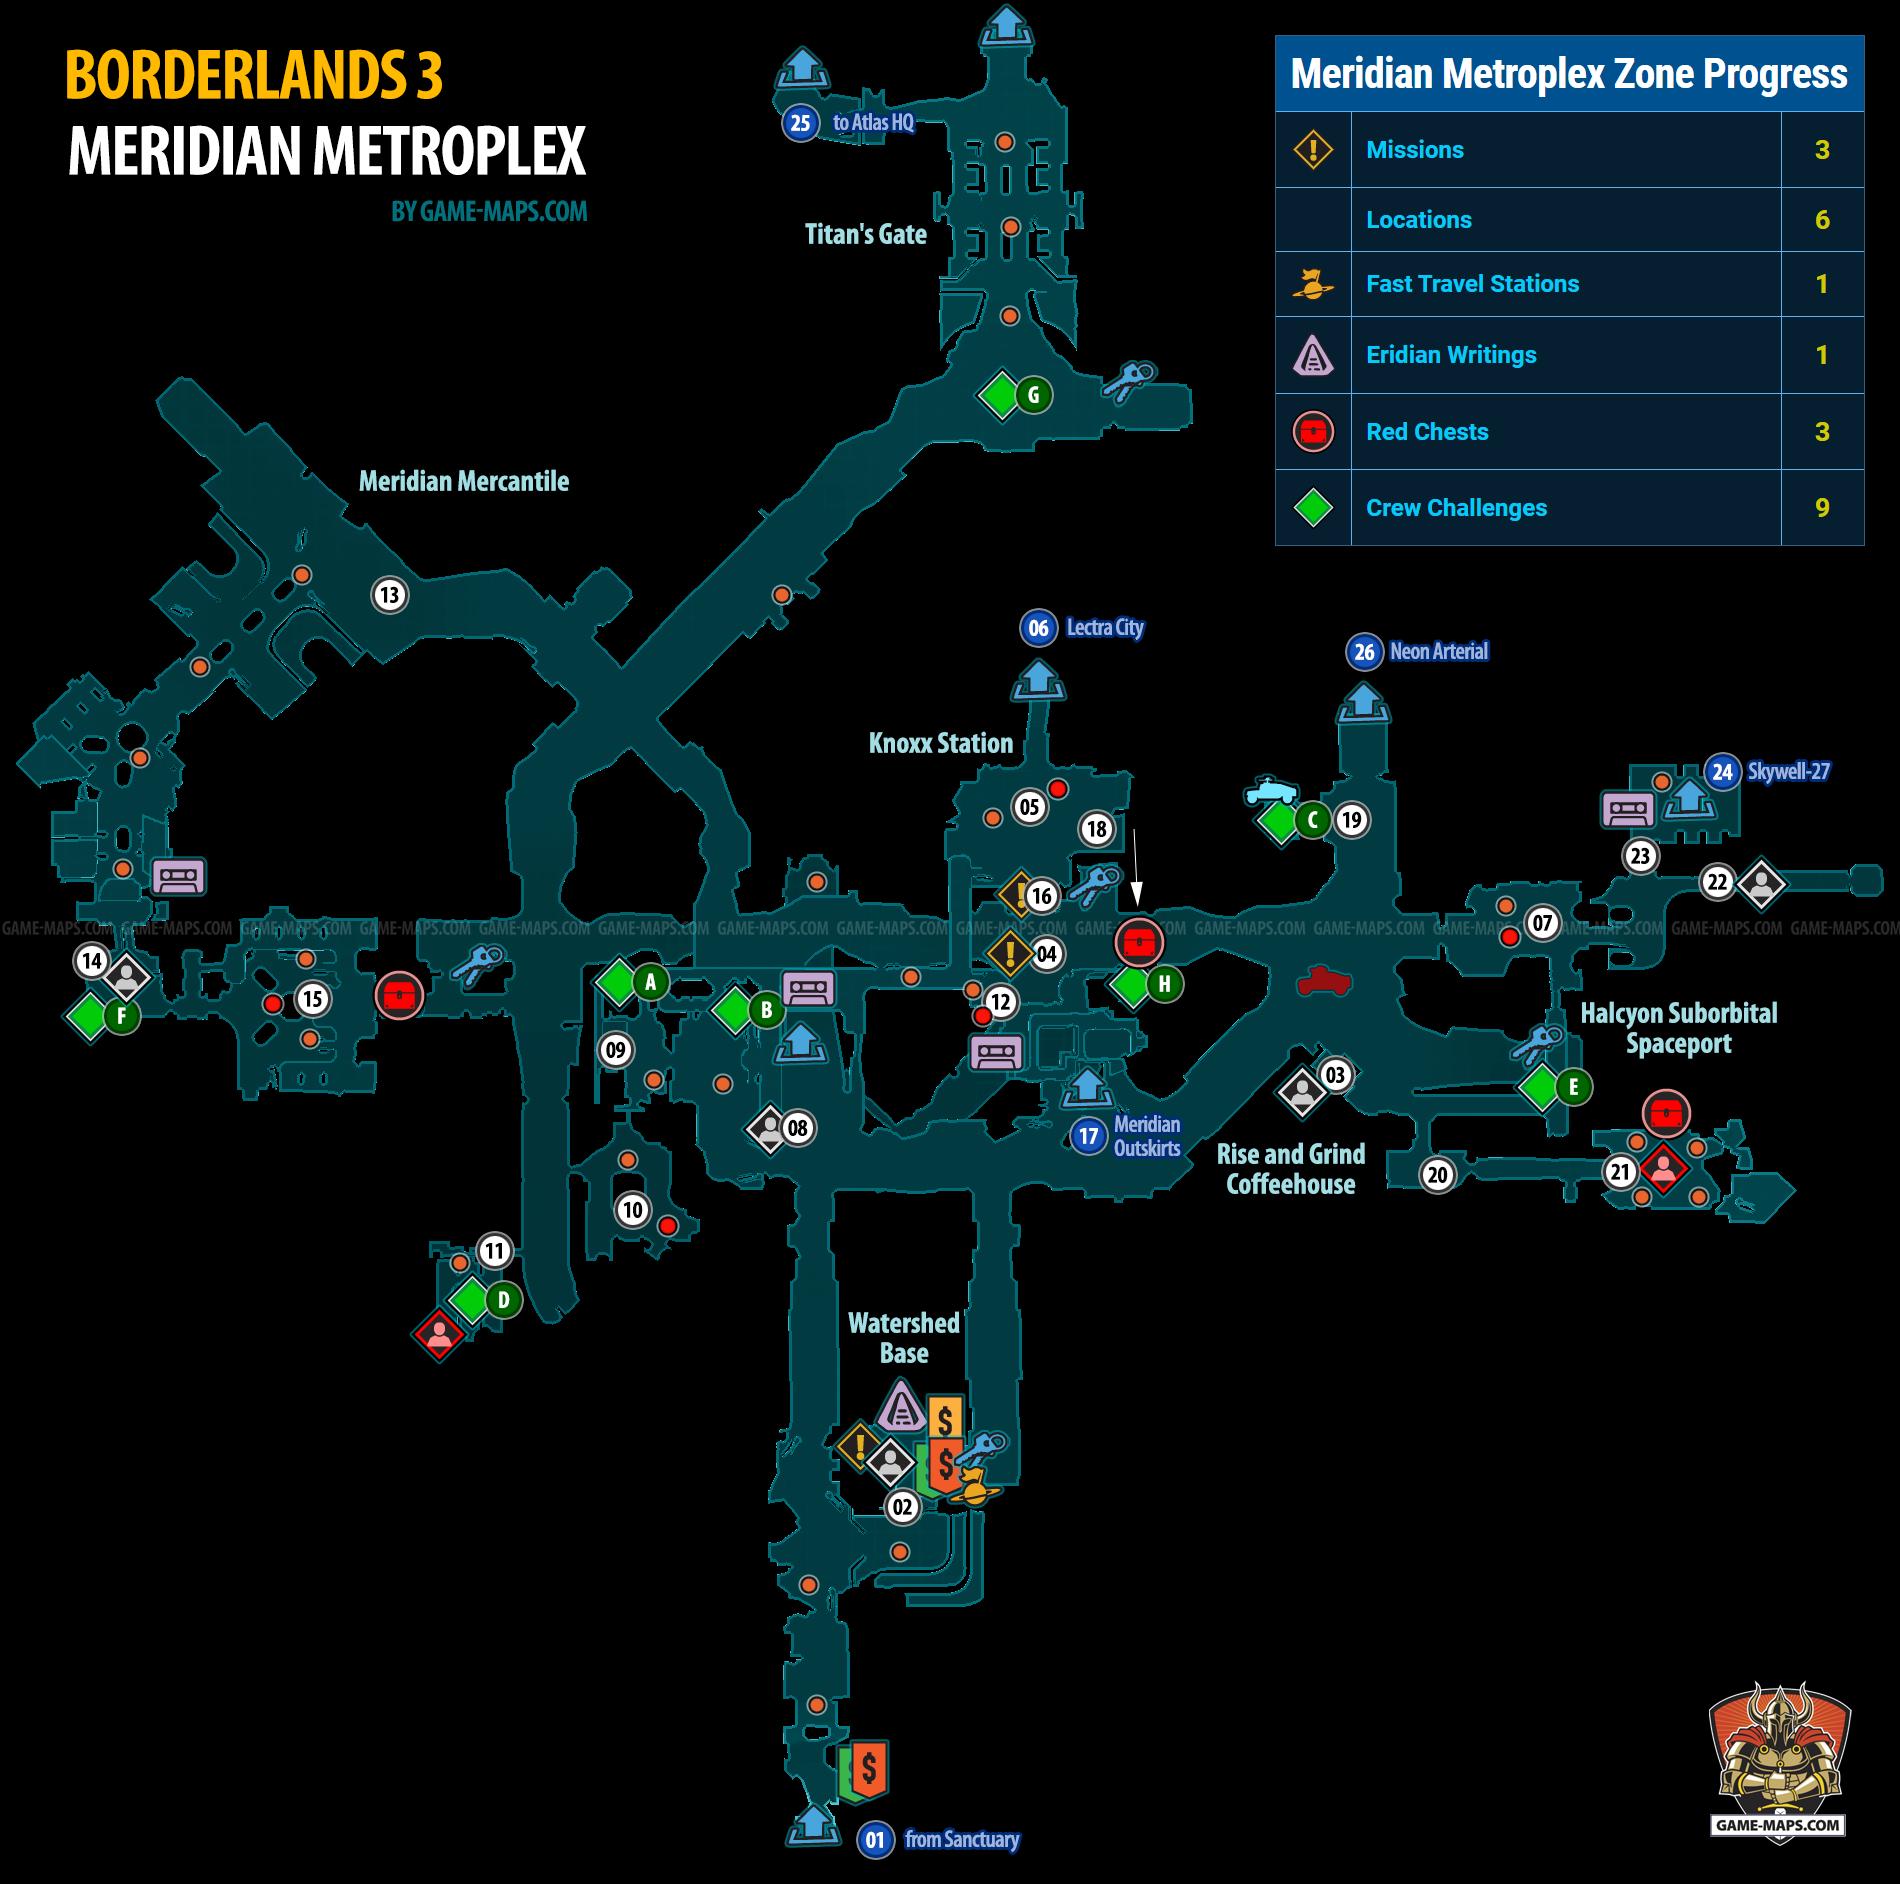 Meridian Metroplex Map on Promethea Planet for Borderlands 3